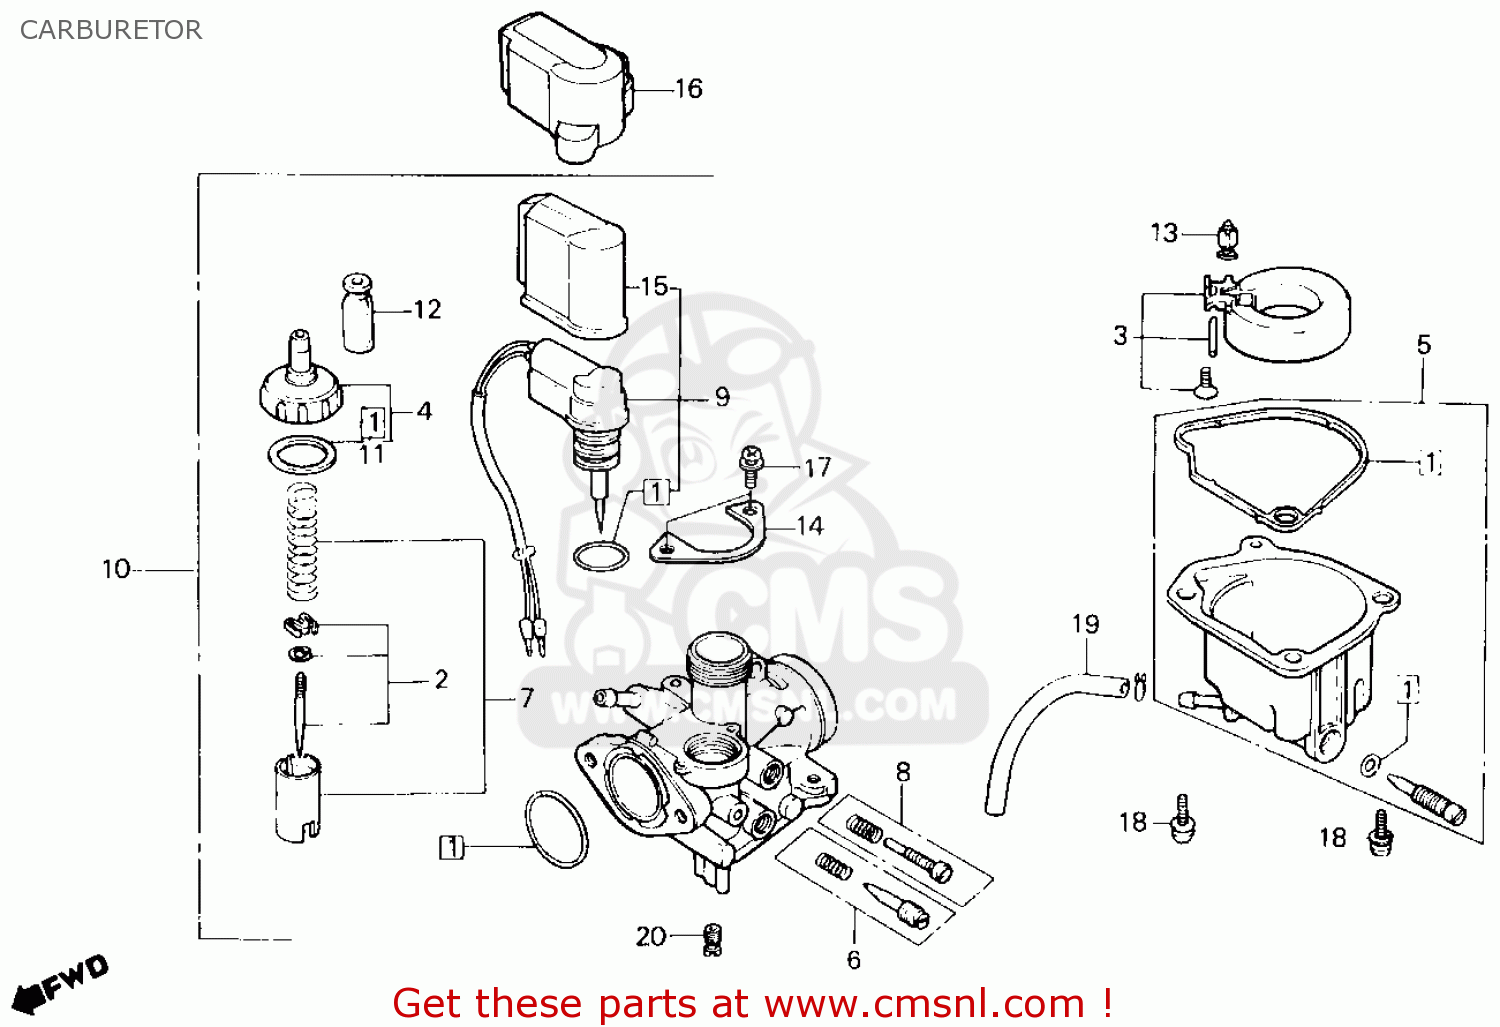 1986 Honda spree wiring diagram #3